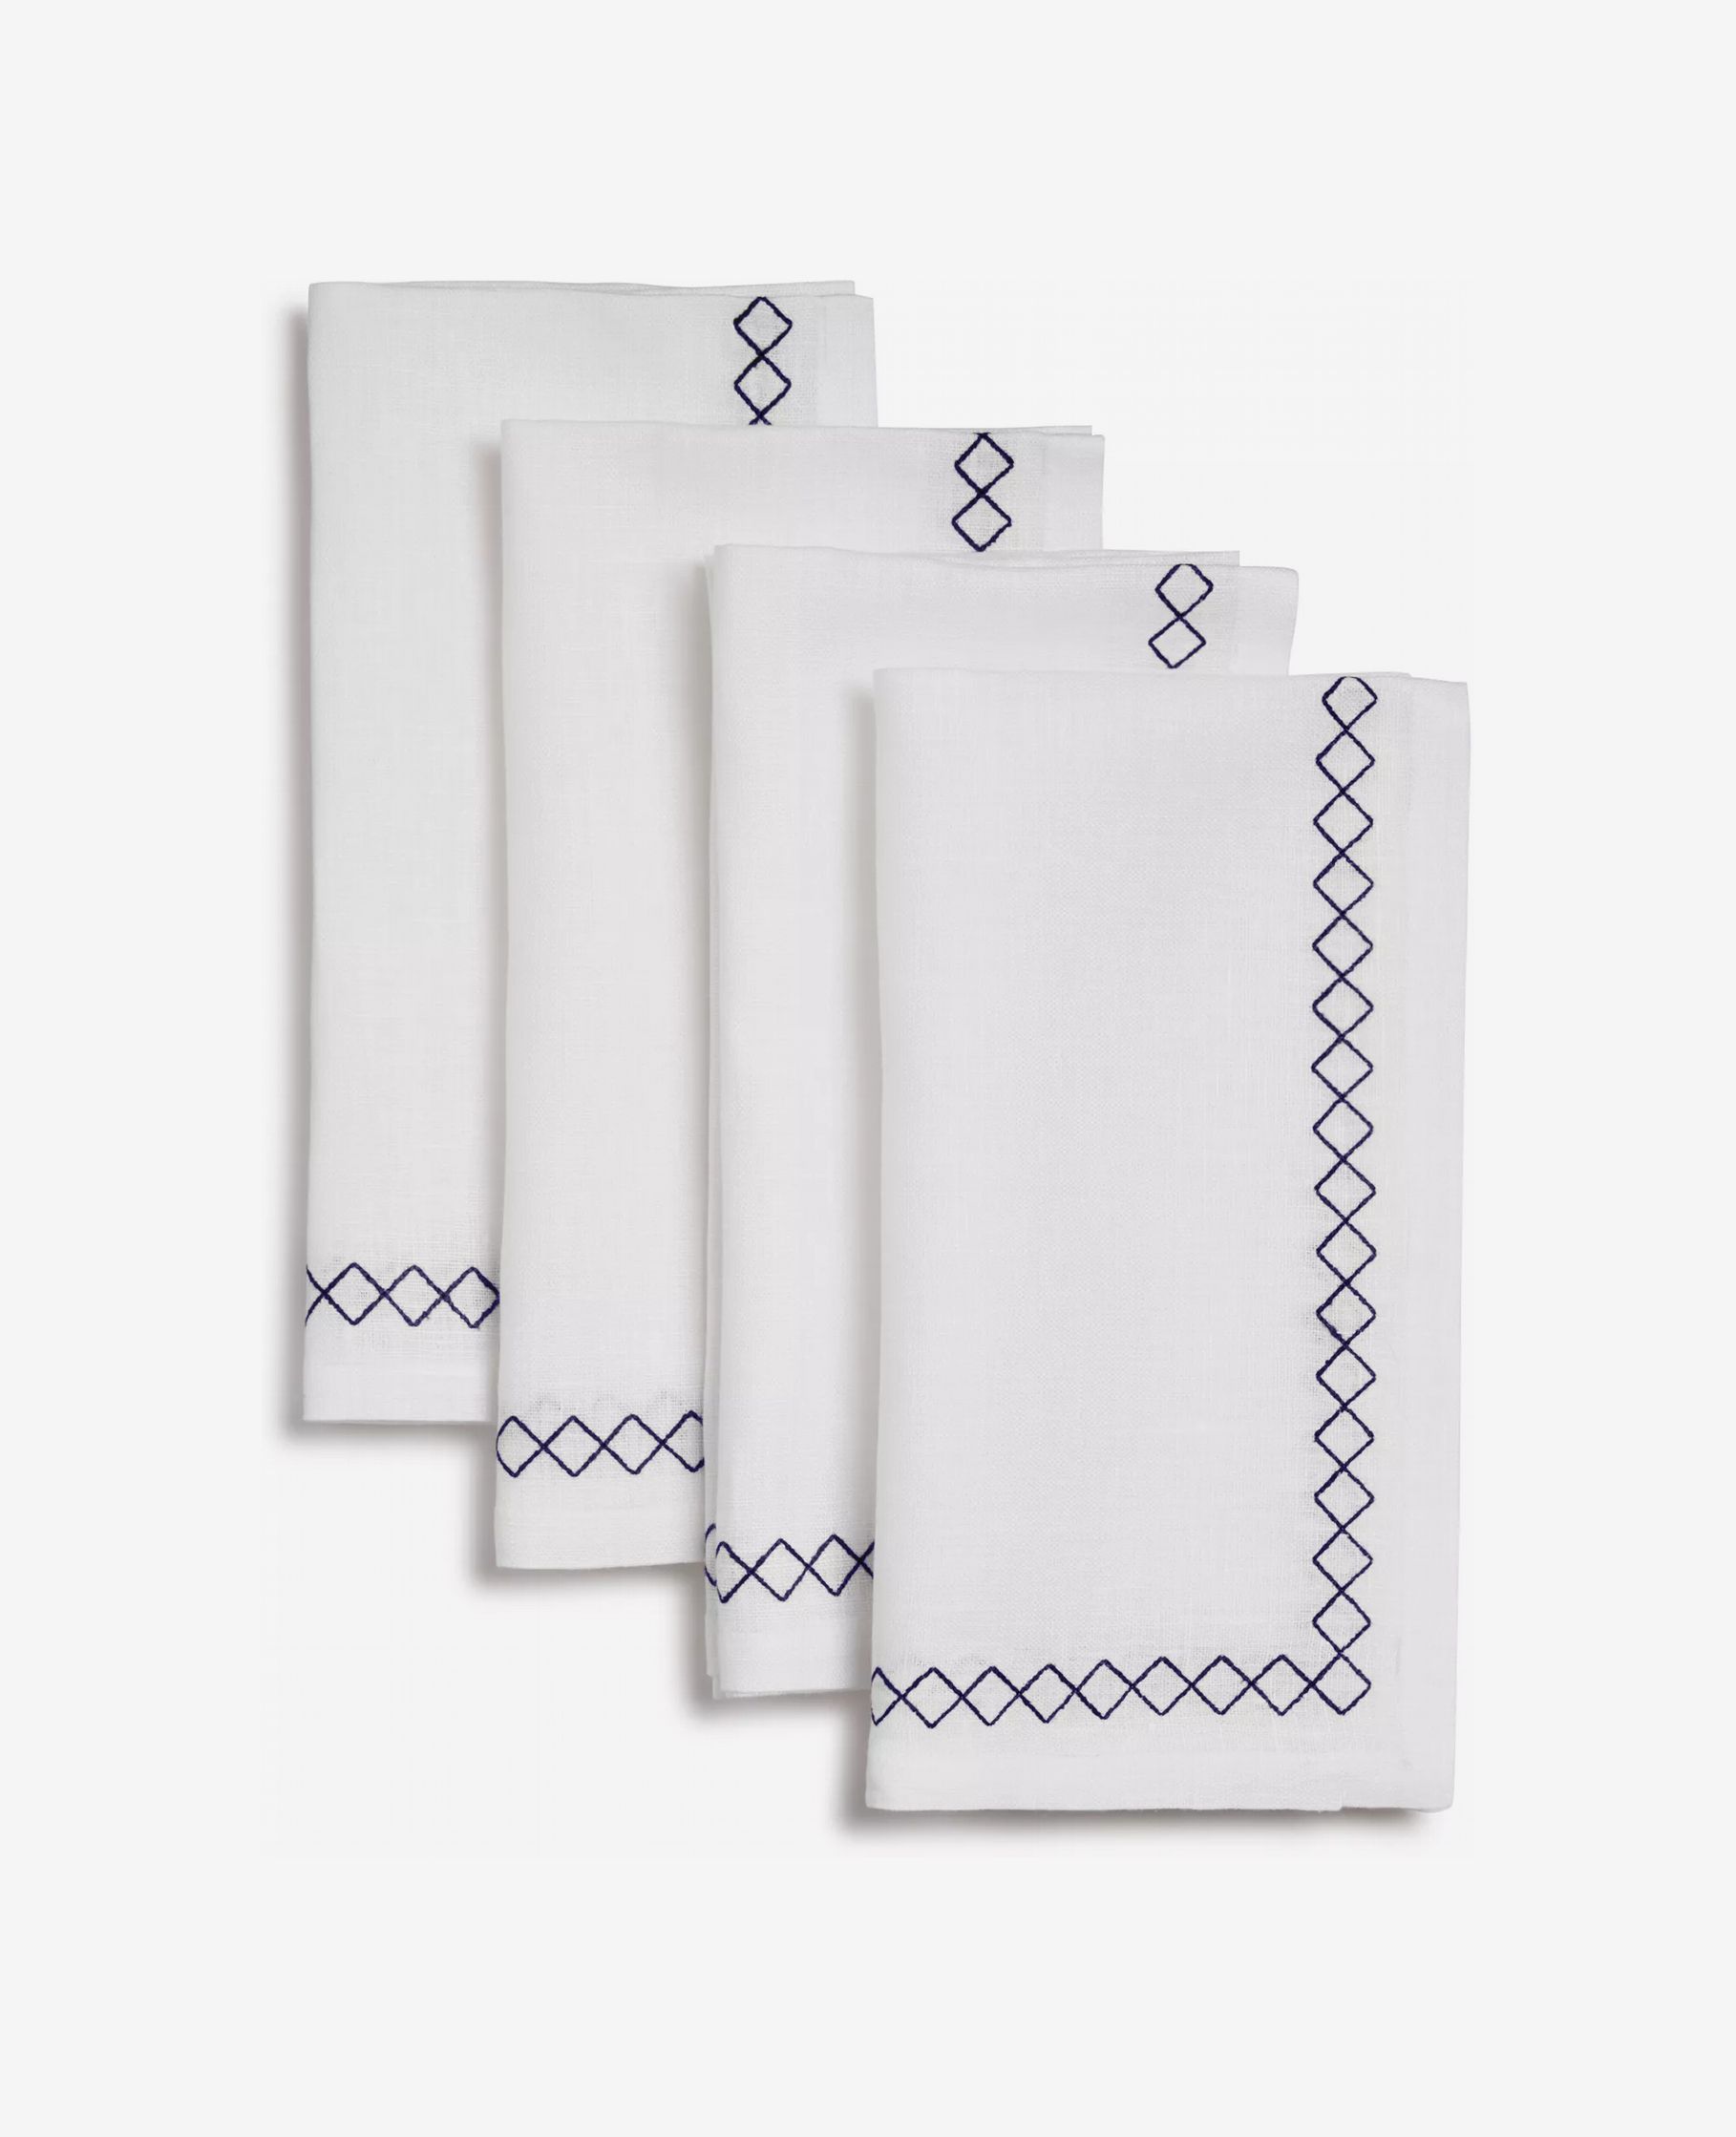 Lingsisi Dinner Cloth Napkins, Set of 6 , Soft & Durable Reusable